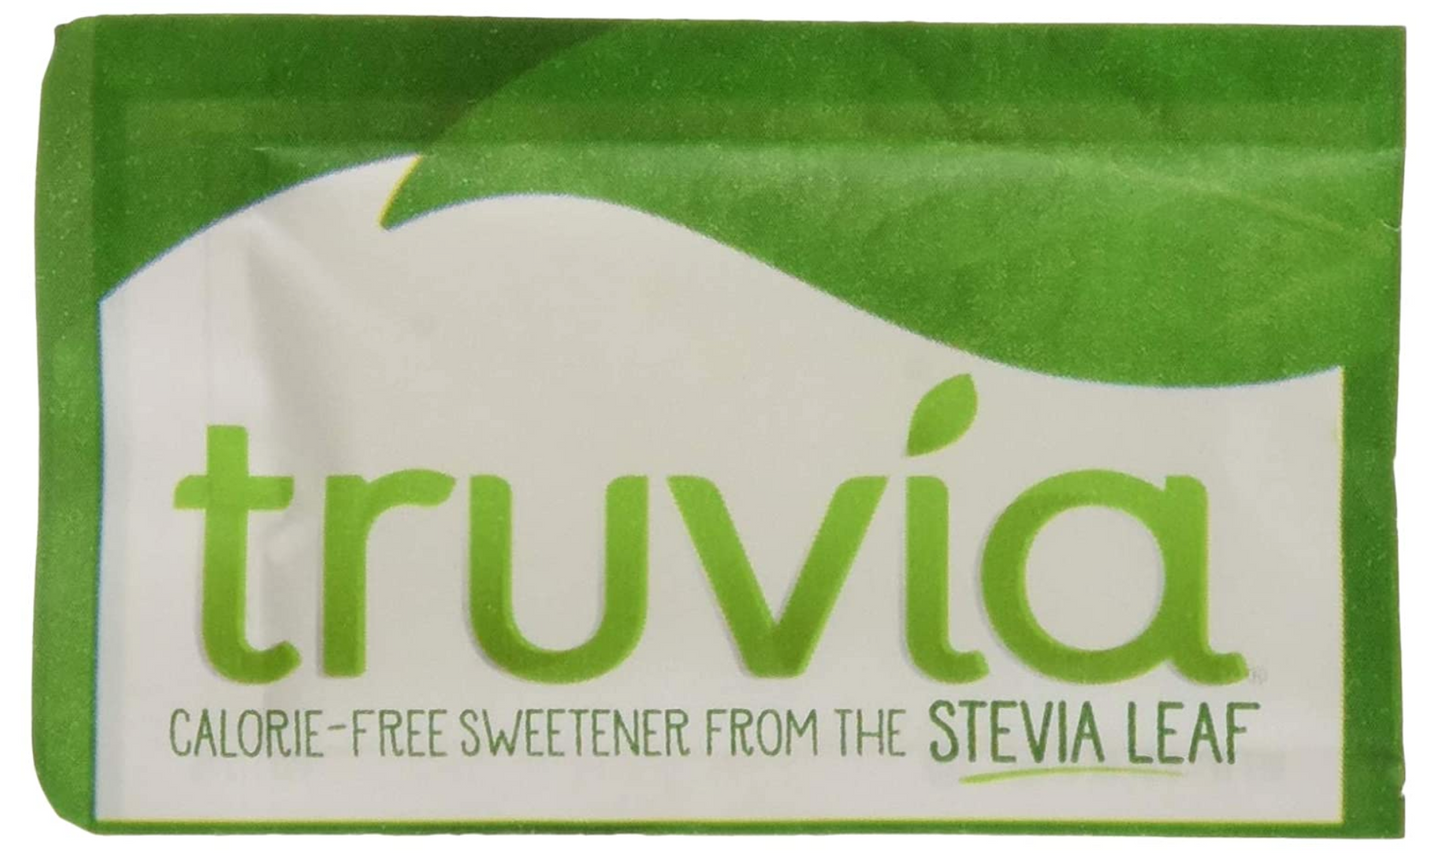 Truvia Natural Sweetener - 400 Count